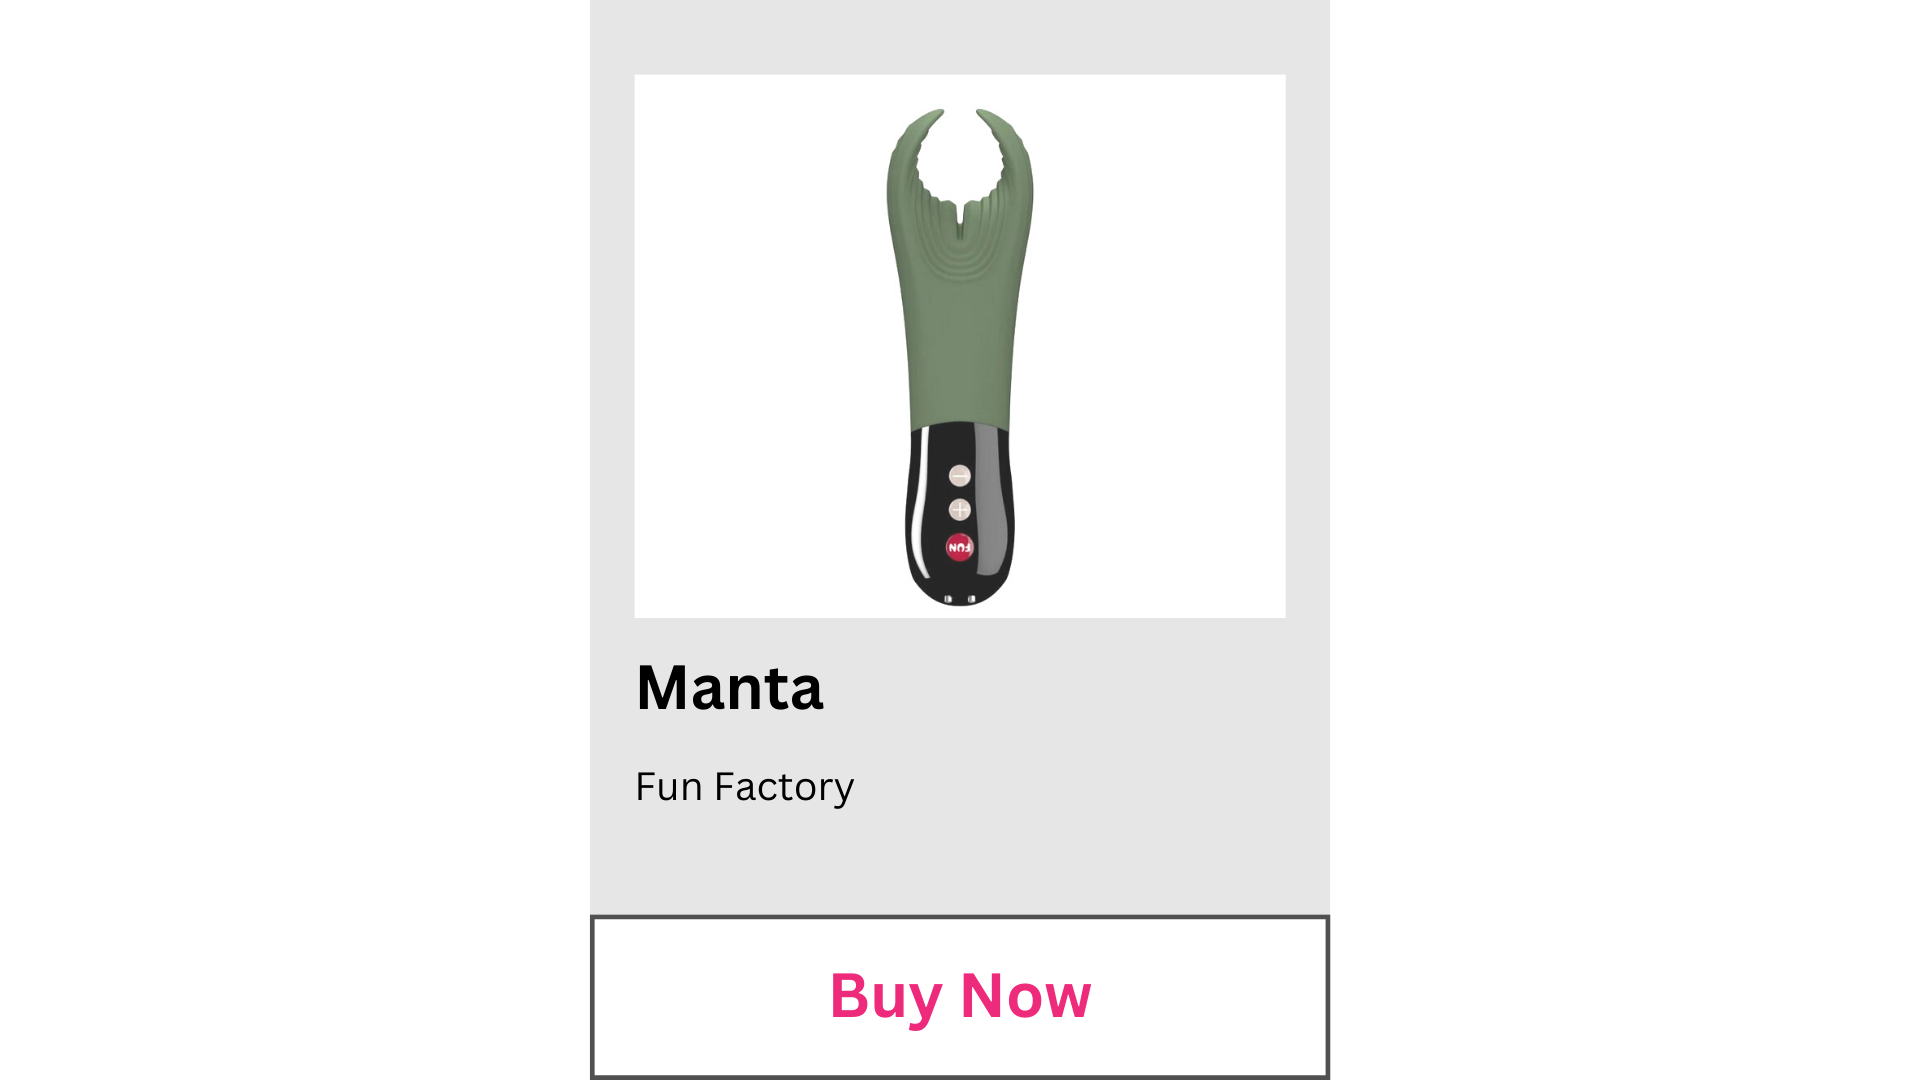 Buy the vibrating men's sex toy, Manta.